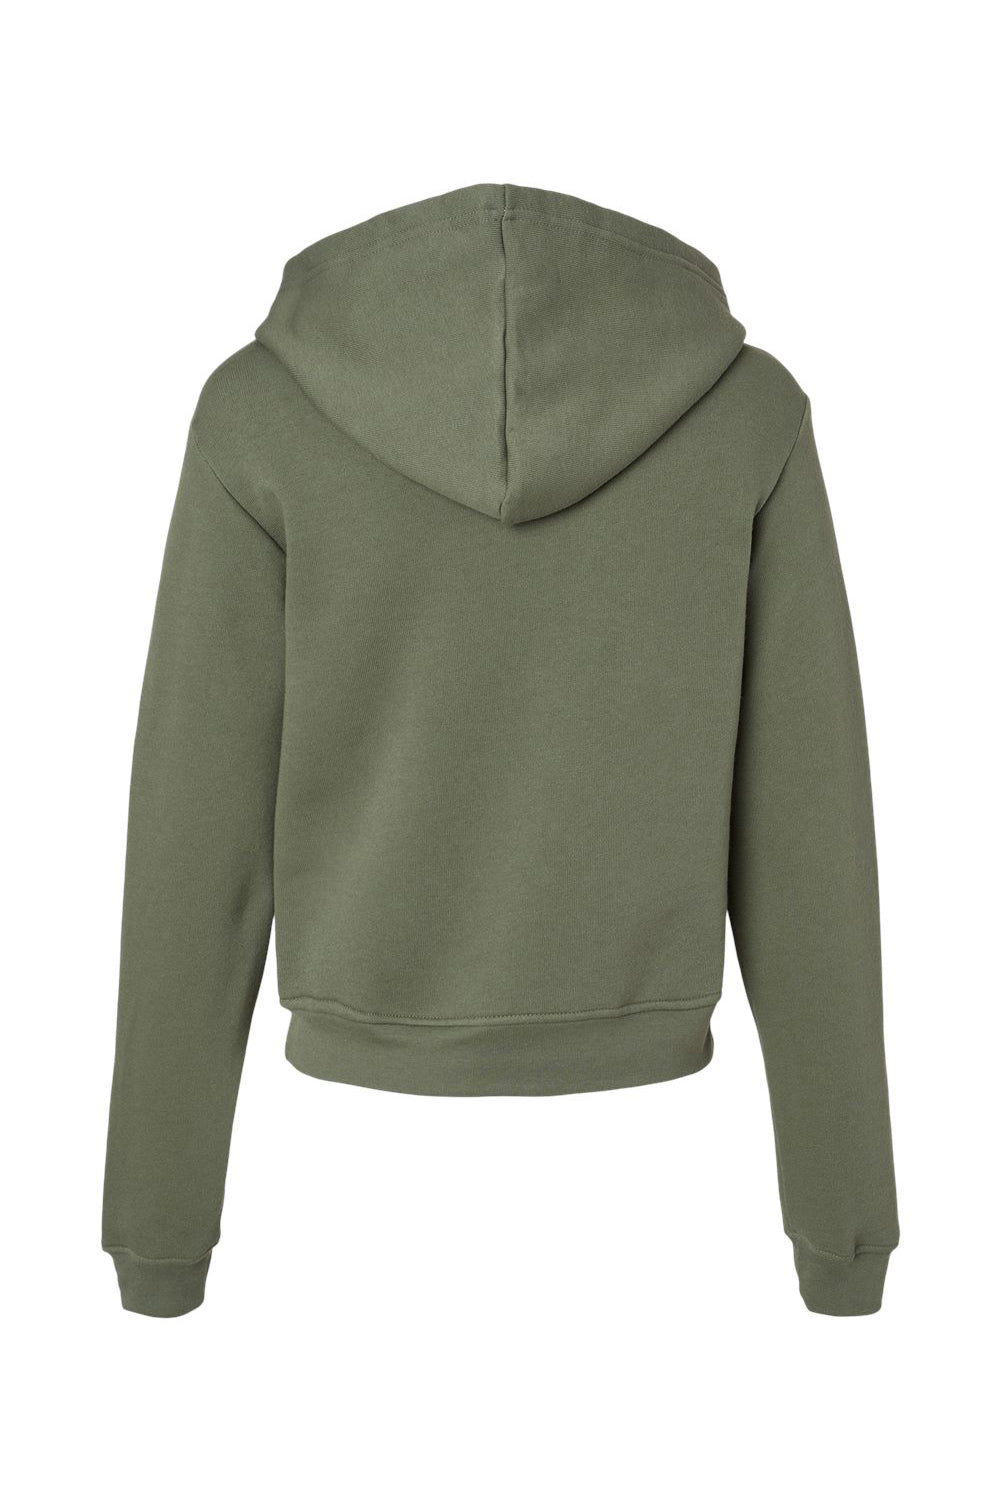 Bella + Canvas 7519 Womens Classic Hooded Sweatshirt Hoodie Military Green Flat Back